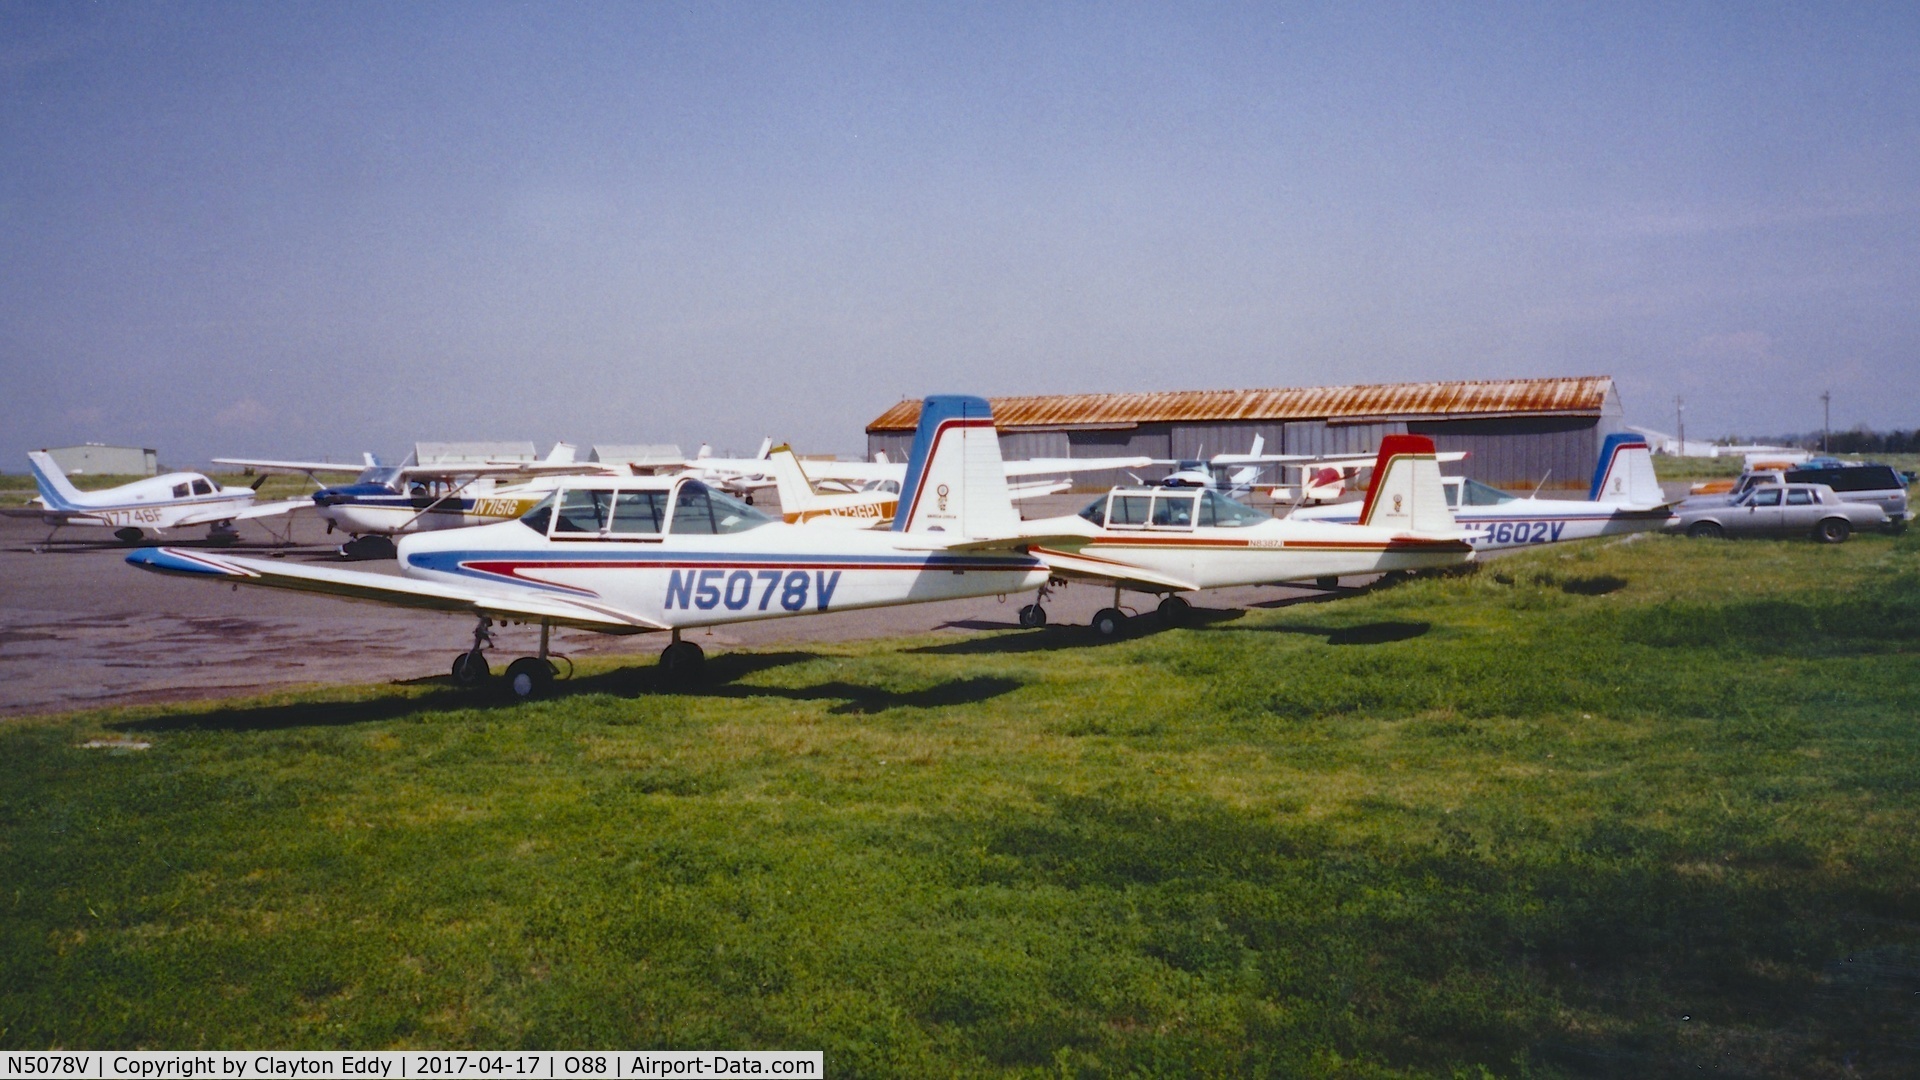 N5078V, 1977 Varga 2150A Kachina C/N VAC-67-77, Old Rio Vista Airport California 1980's?